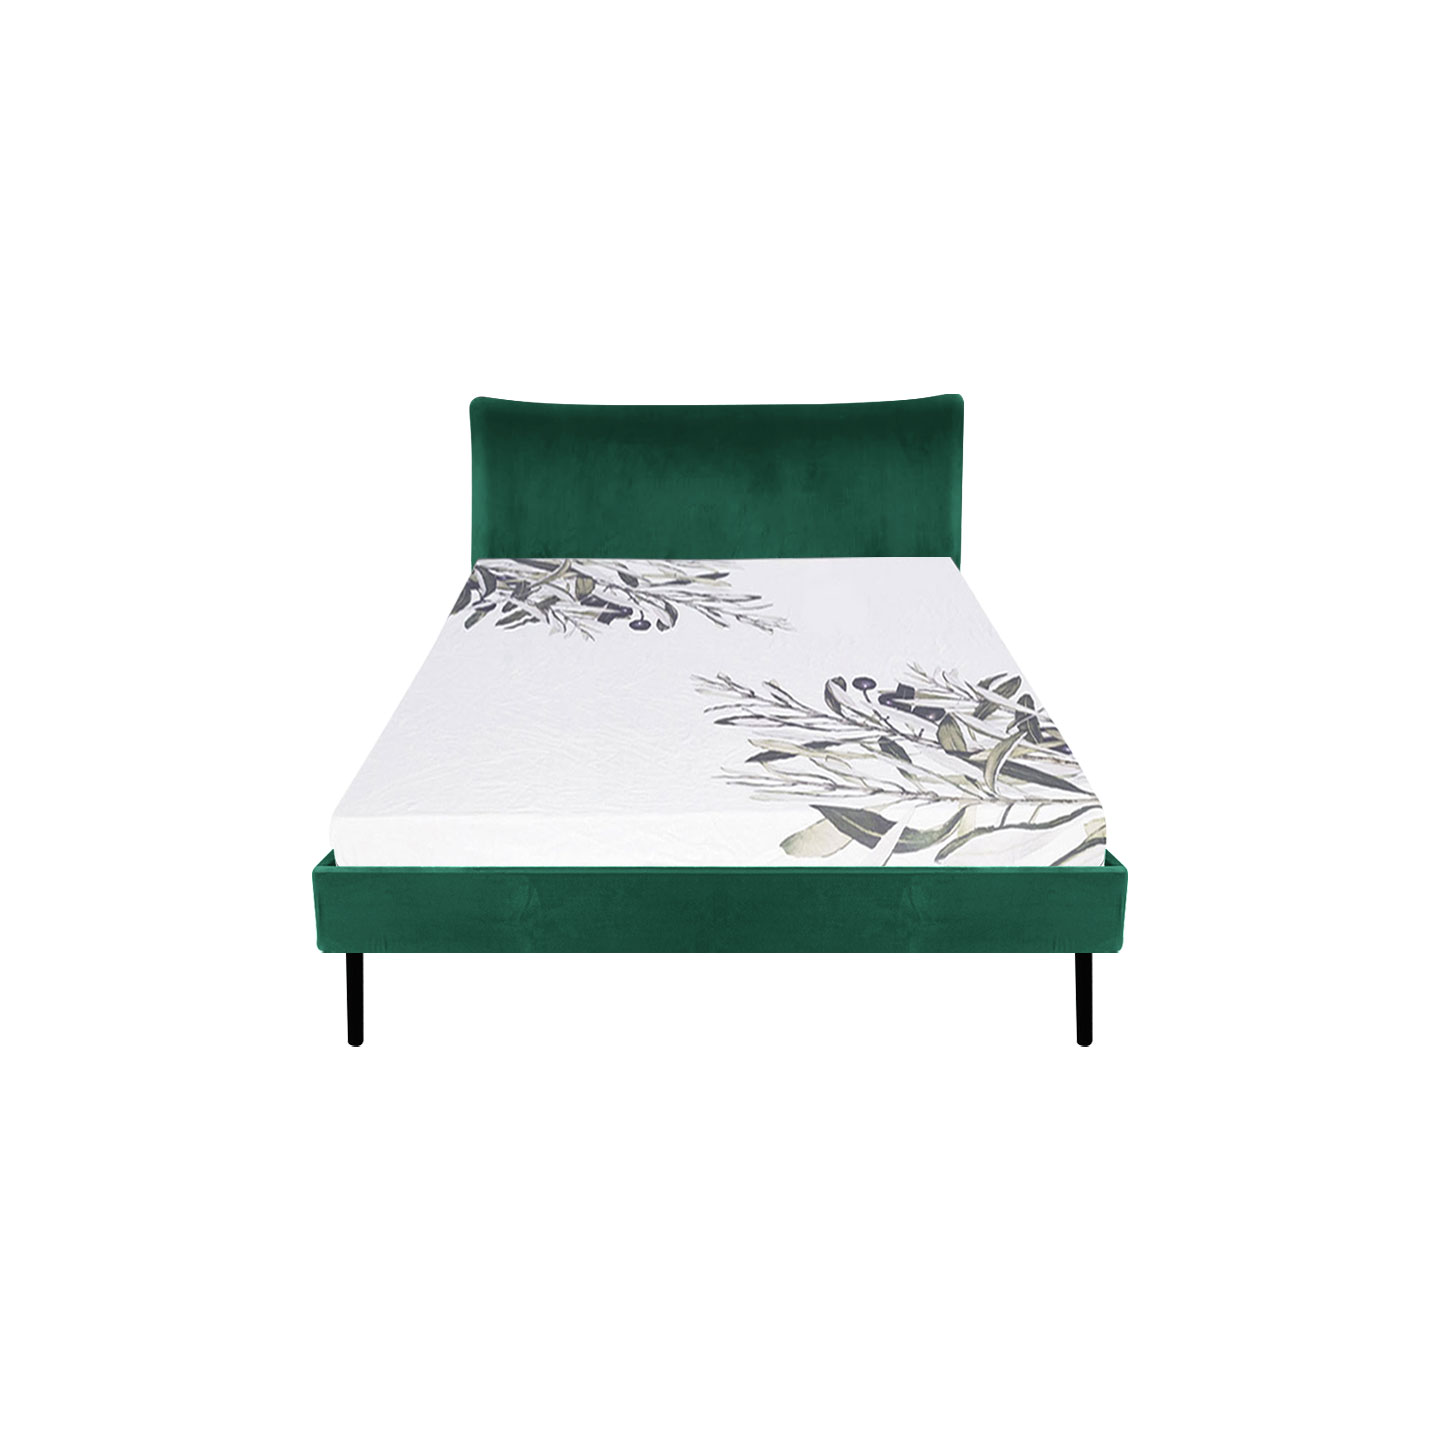 Dessau Green Single Bed